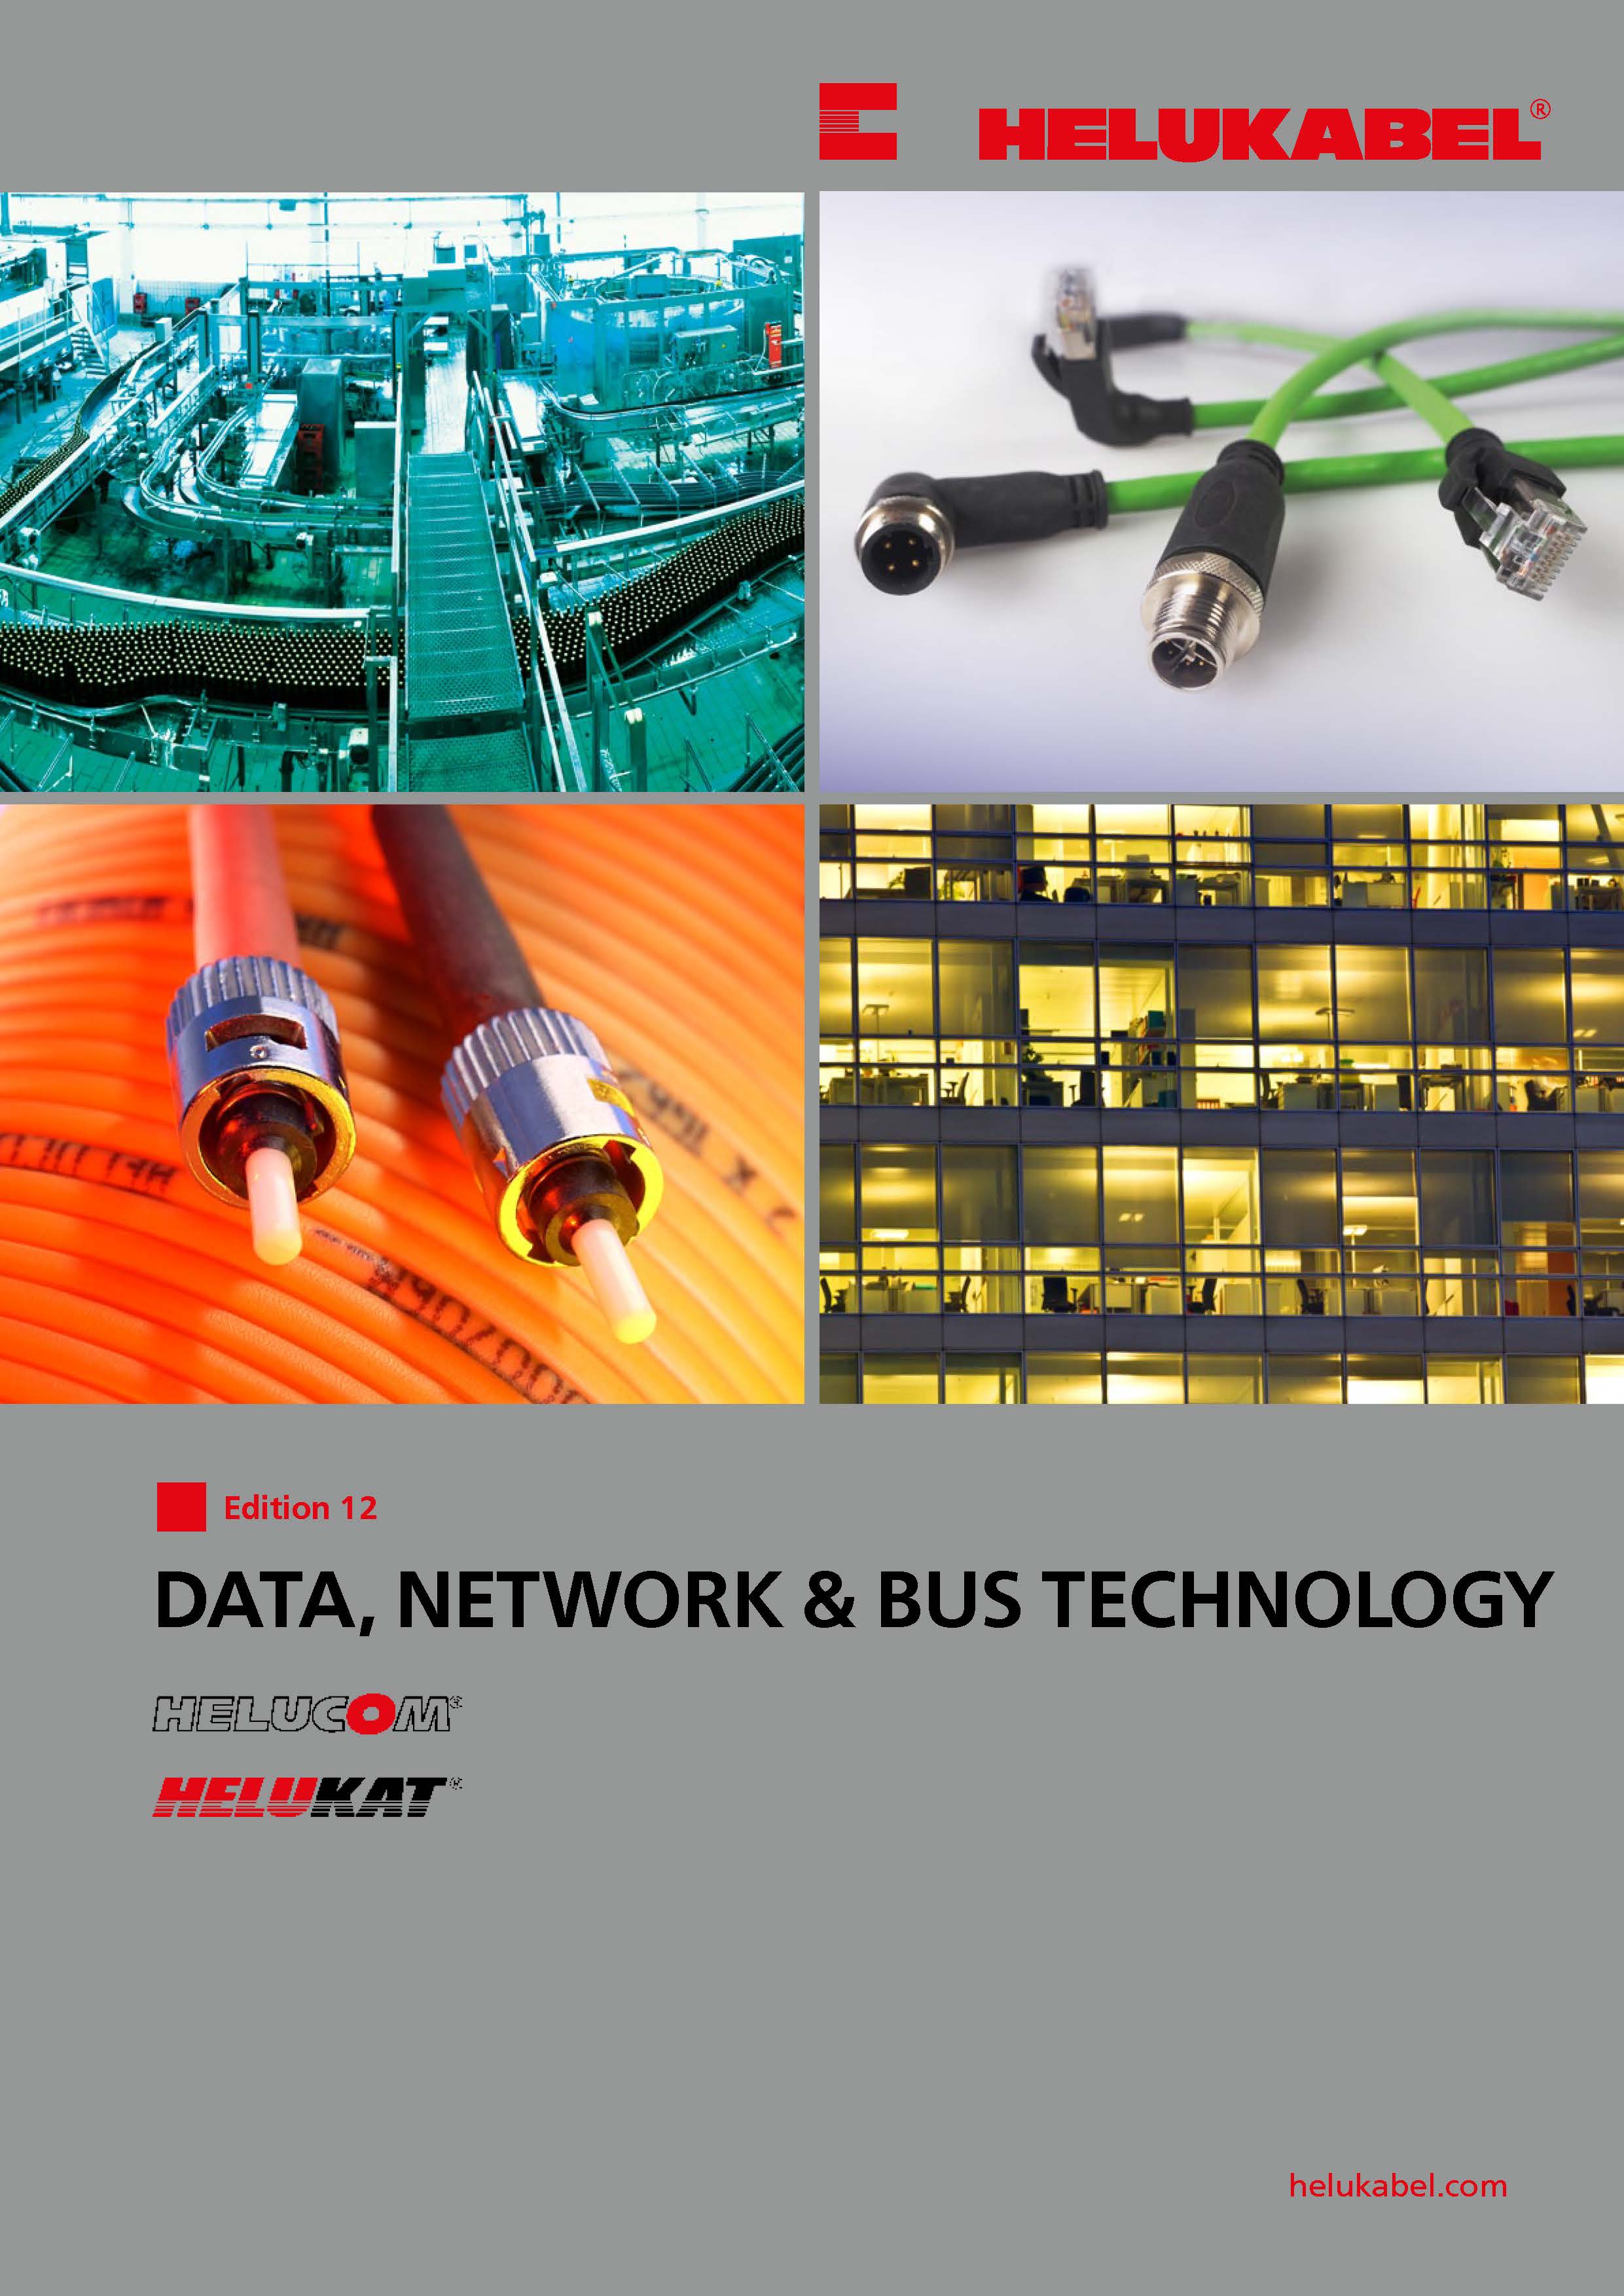 Data, Network & Bus Technology Ed. 12